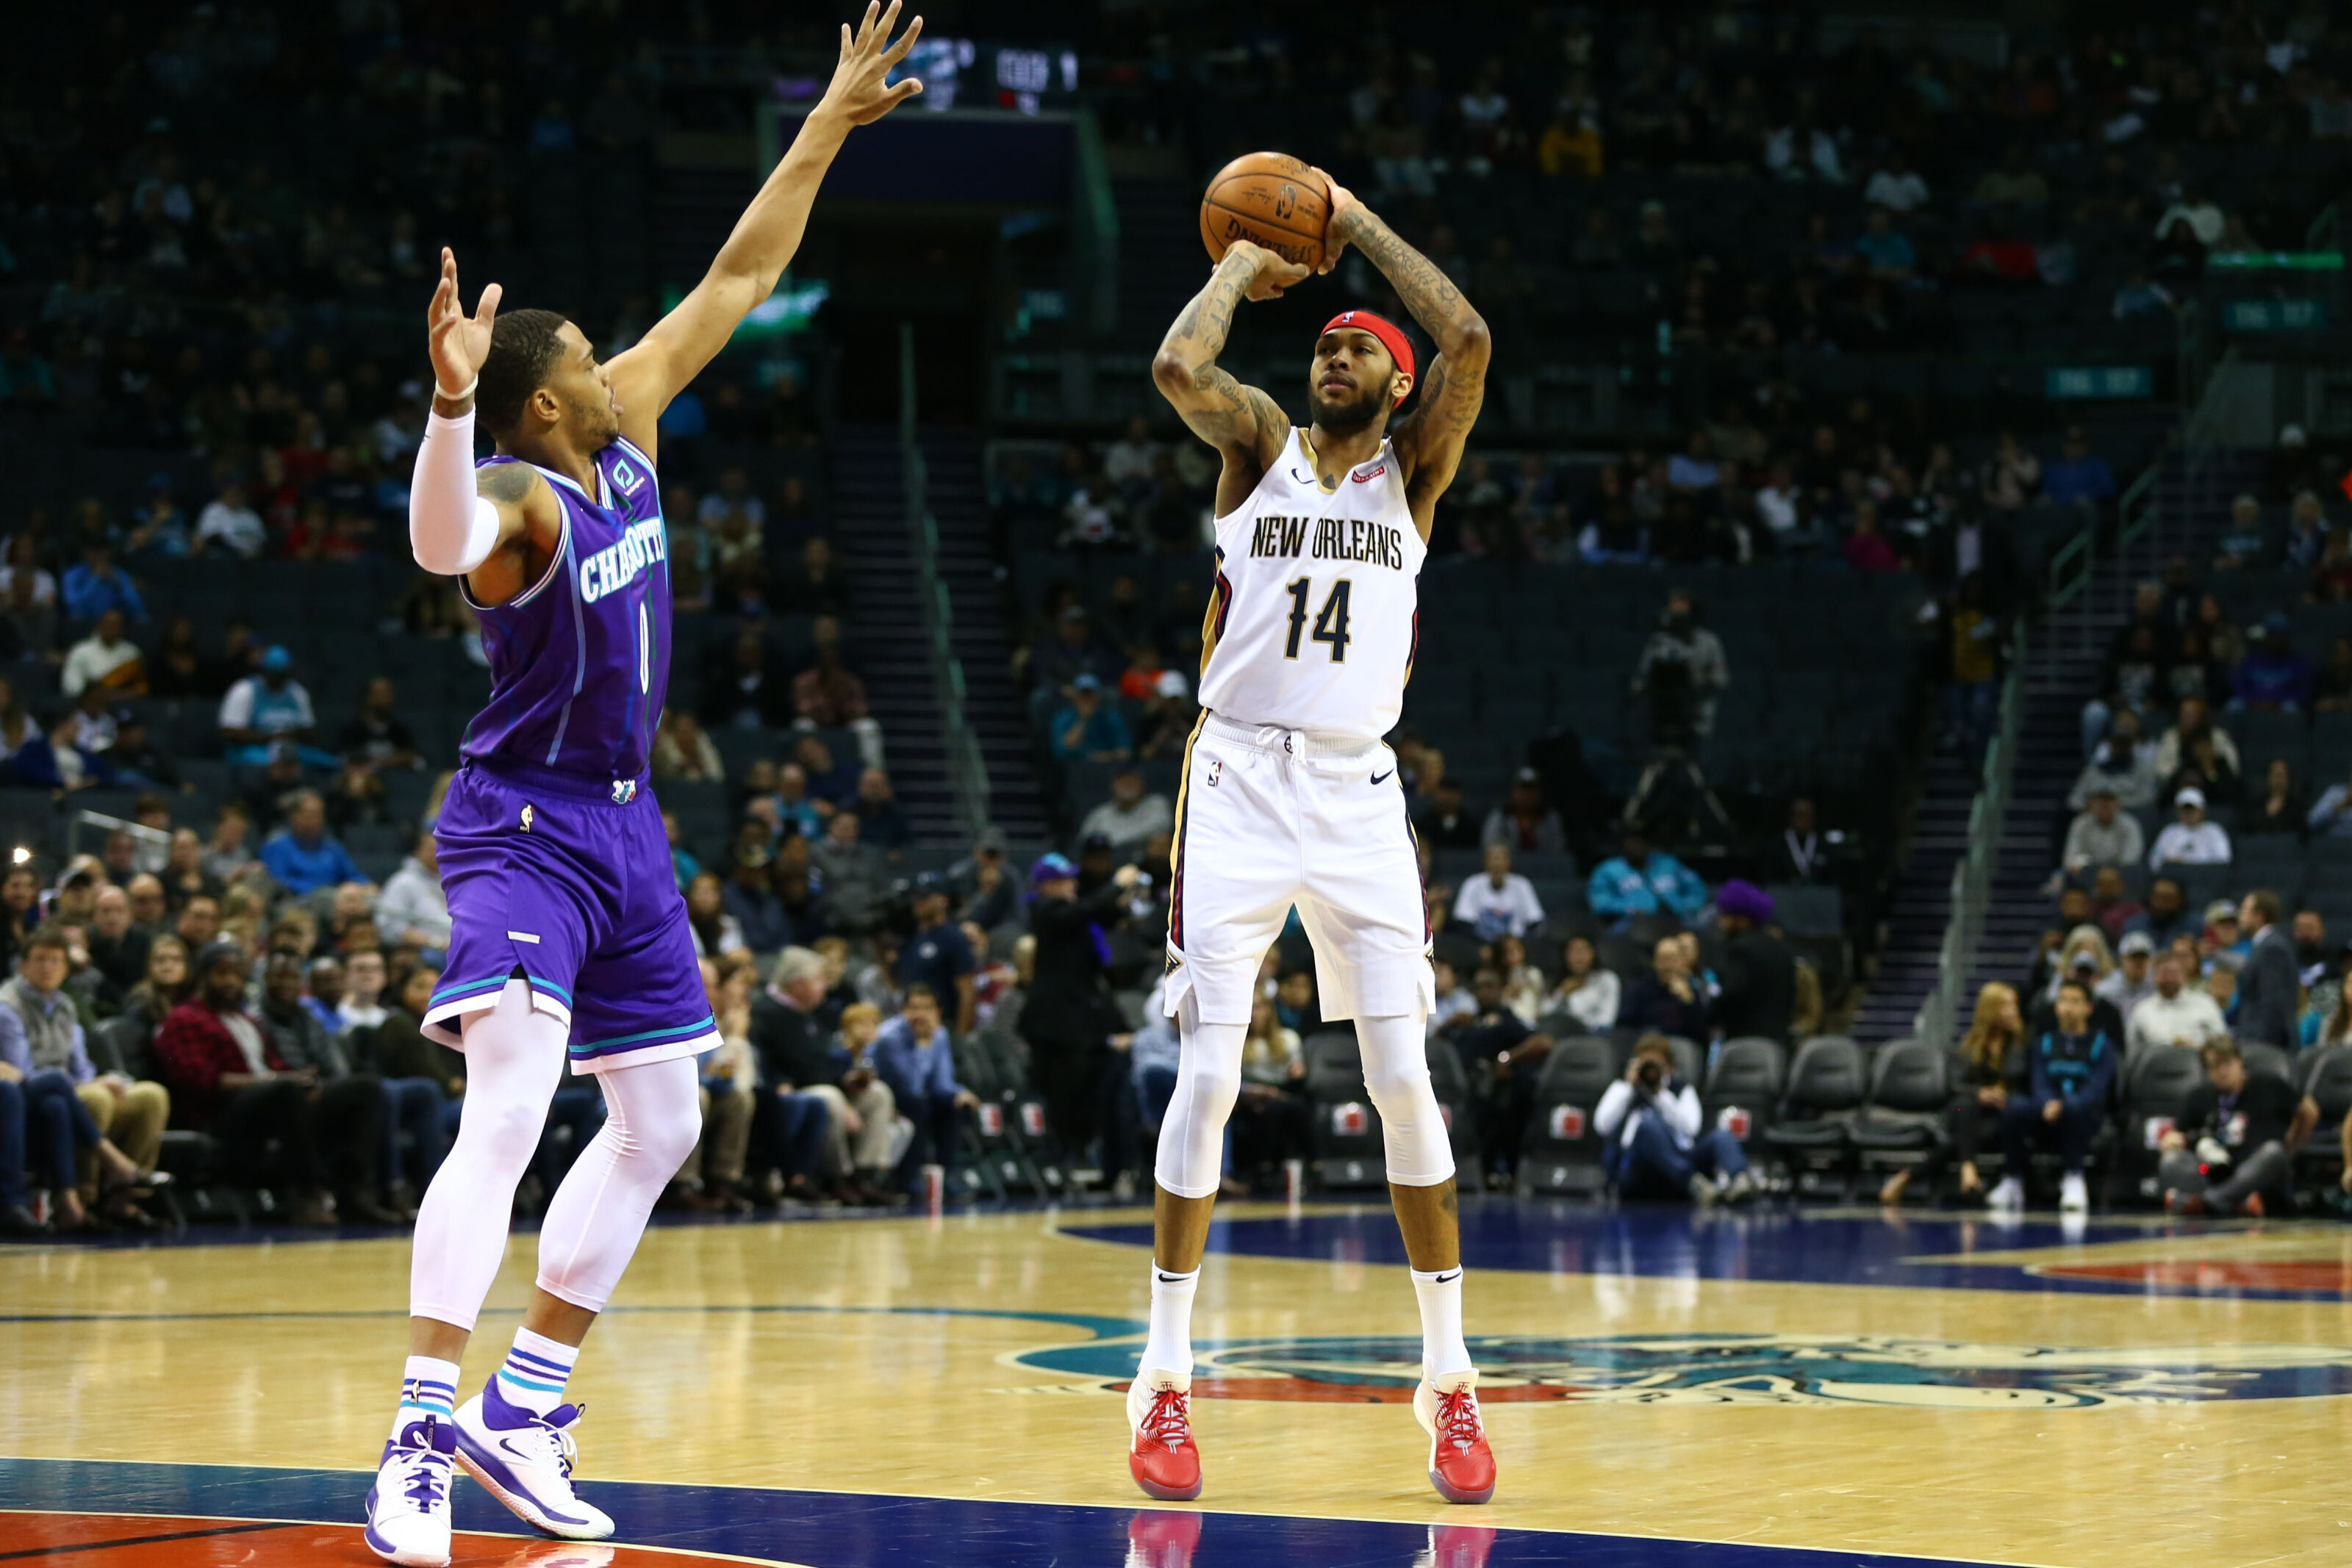 NBA: Pelicans get road win over Hornets for 2-0 start